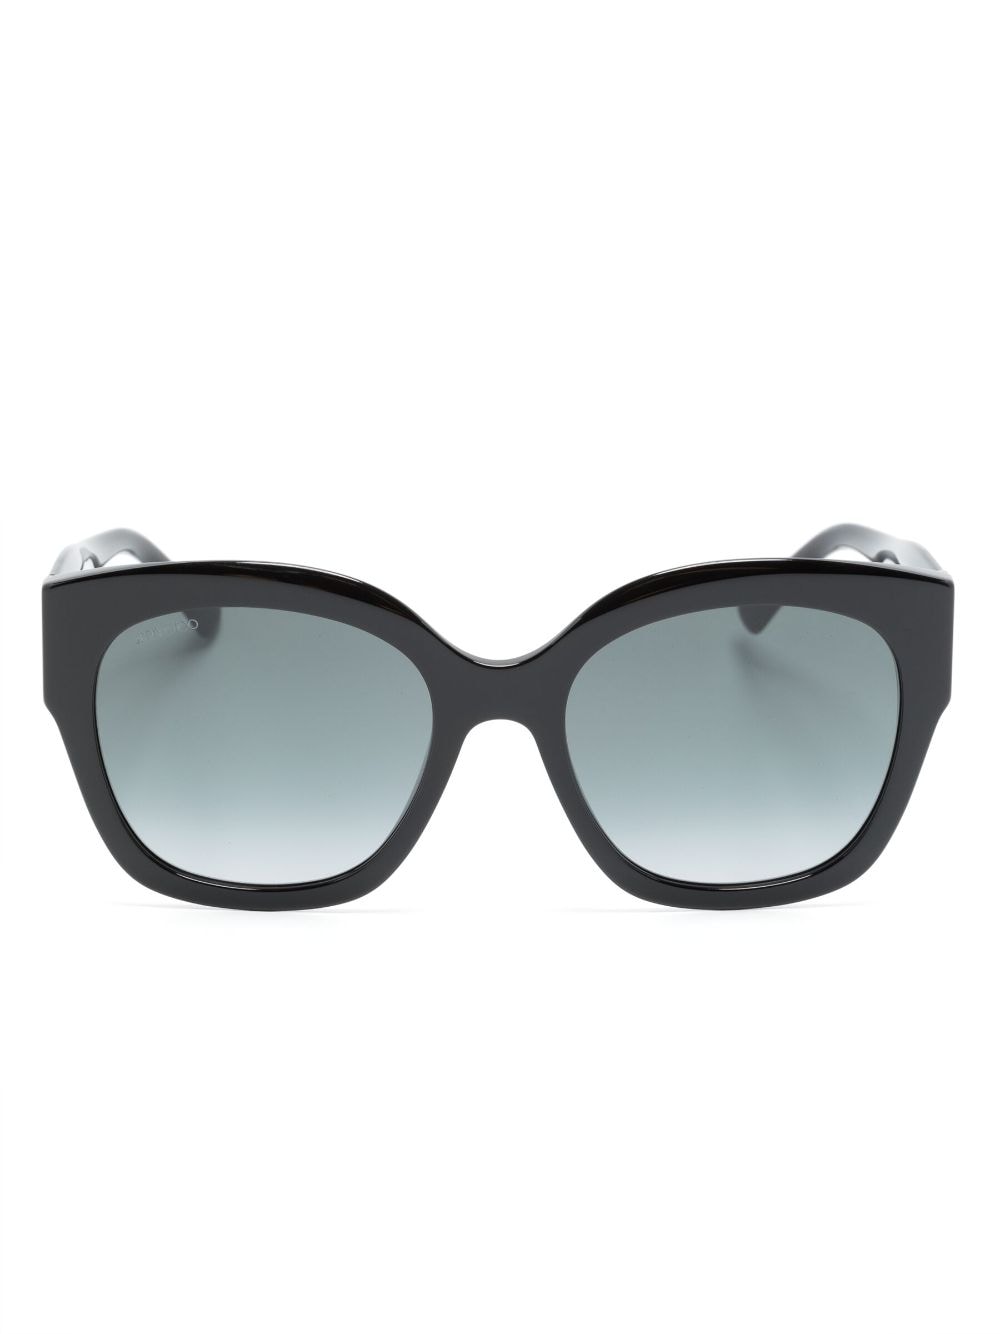 Jimmy Choo Eyewear Leela square-frame sunglasses - Black von Jimmy Choo Eyewear